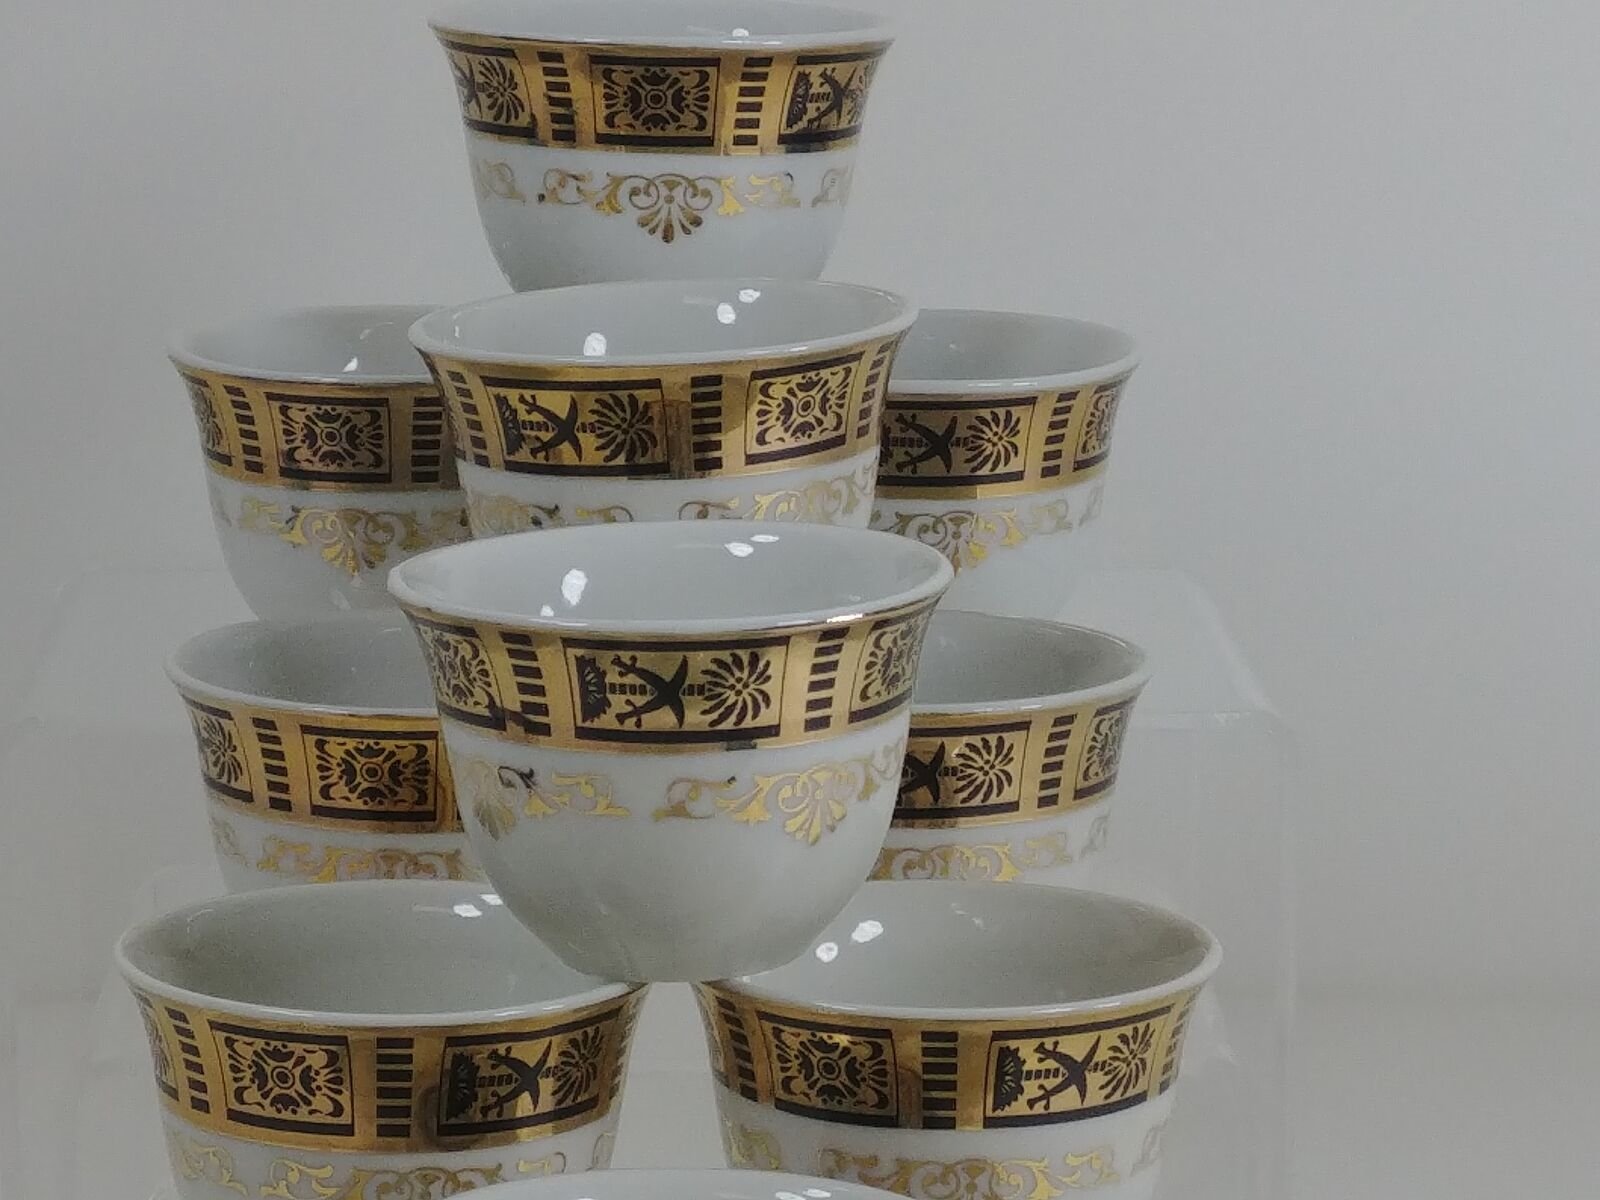 Fine China Cups Saki Tea Coffee 12 pc set